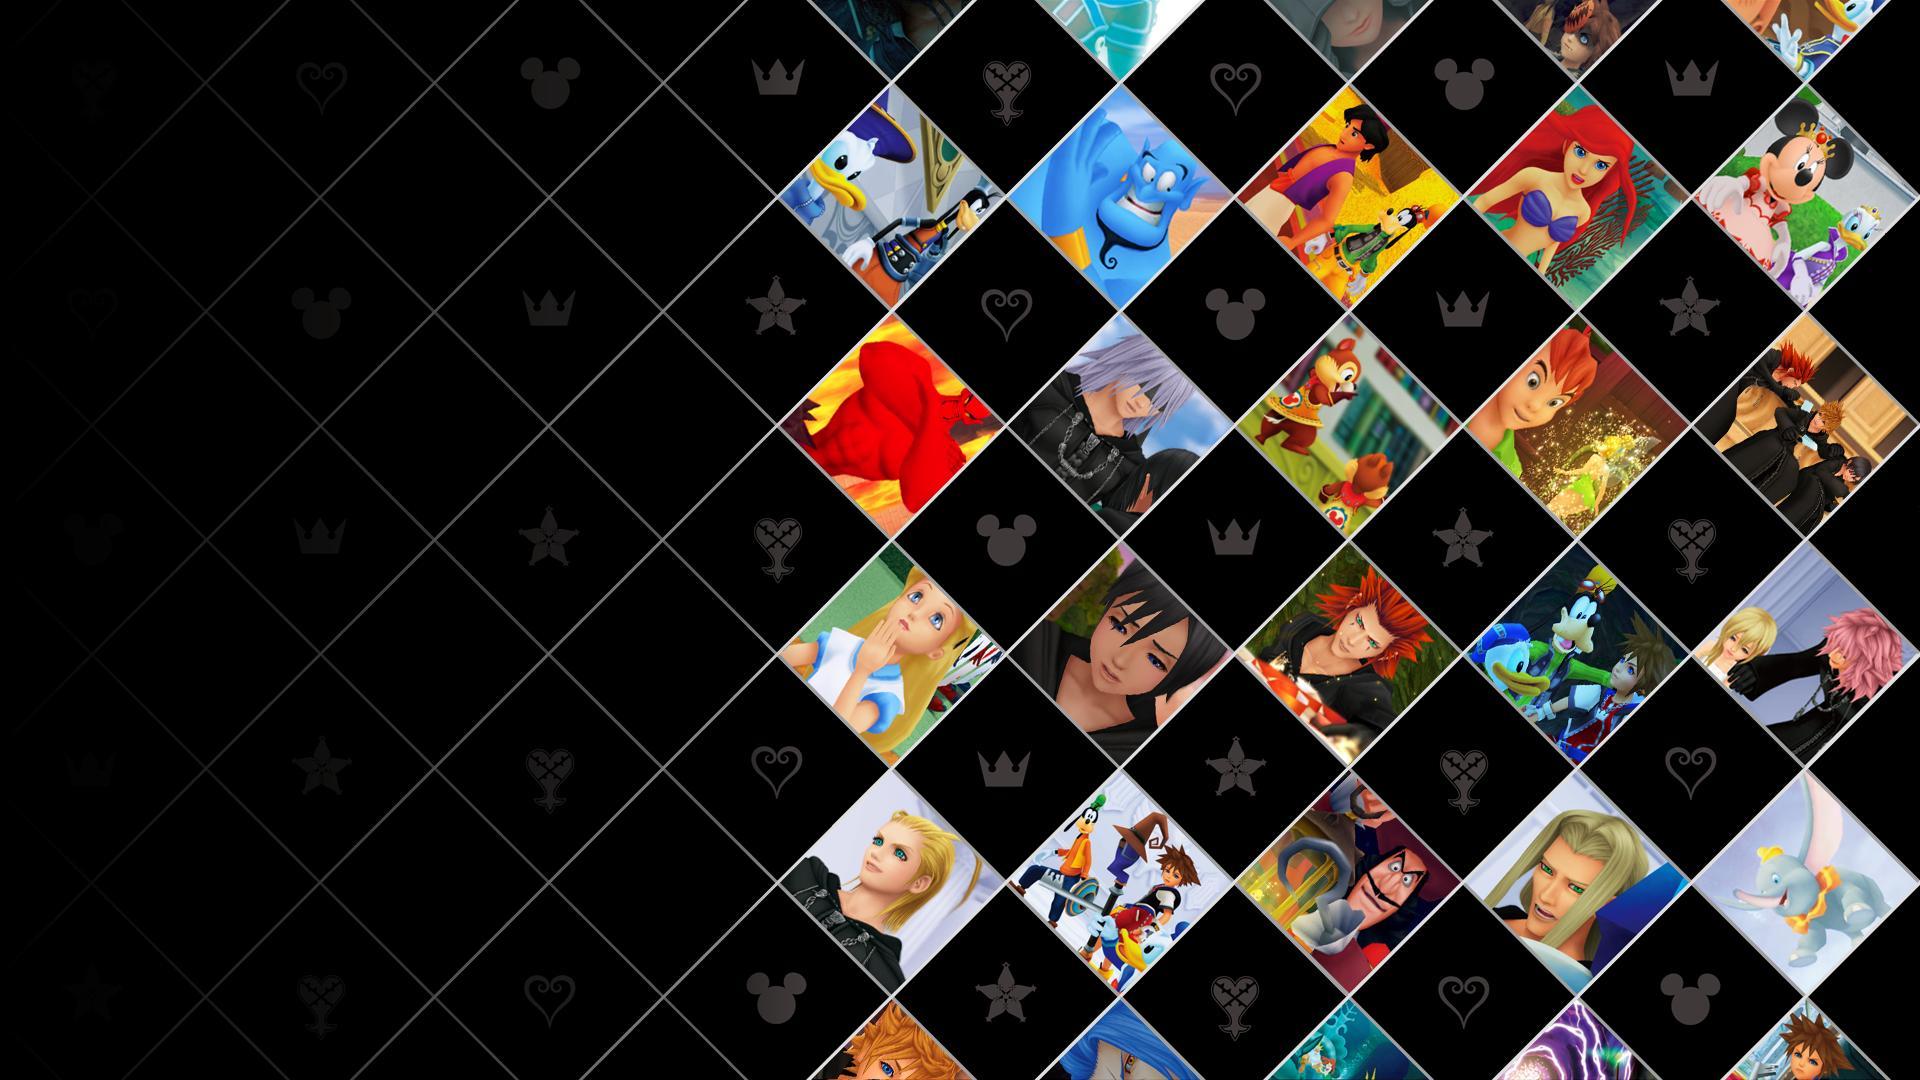 Kingdom Hearts Background and Image (45)